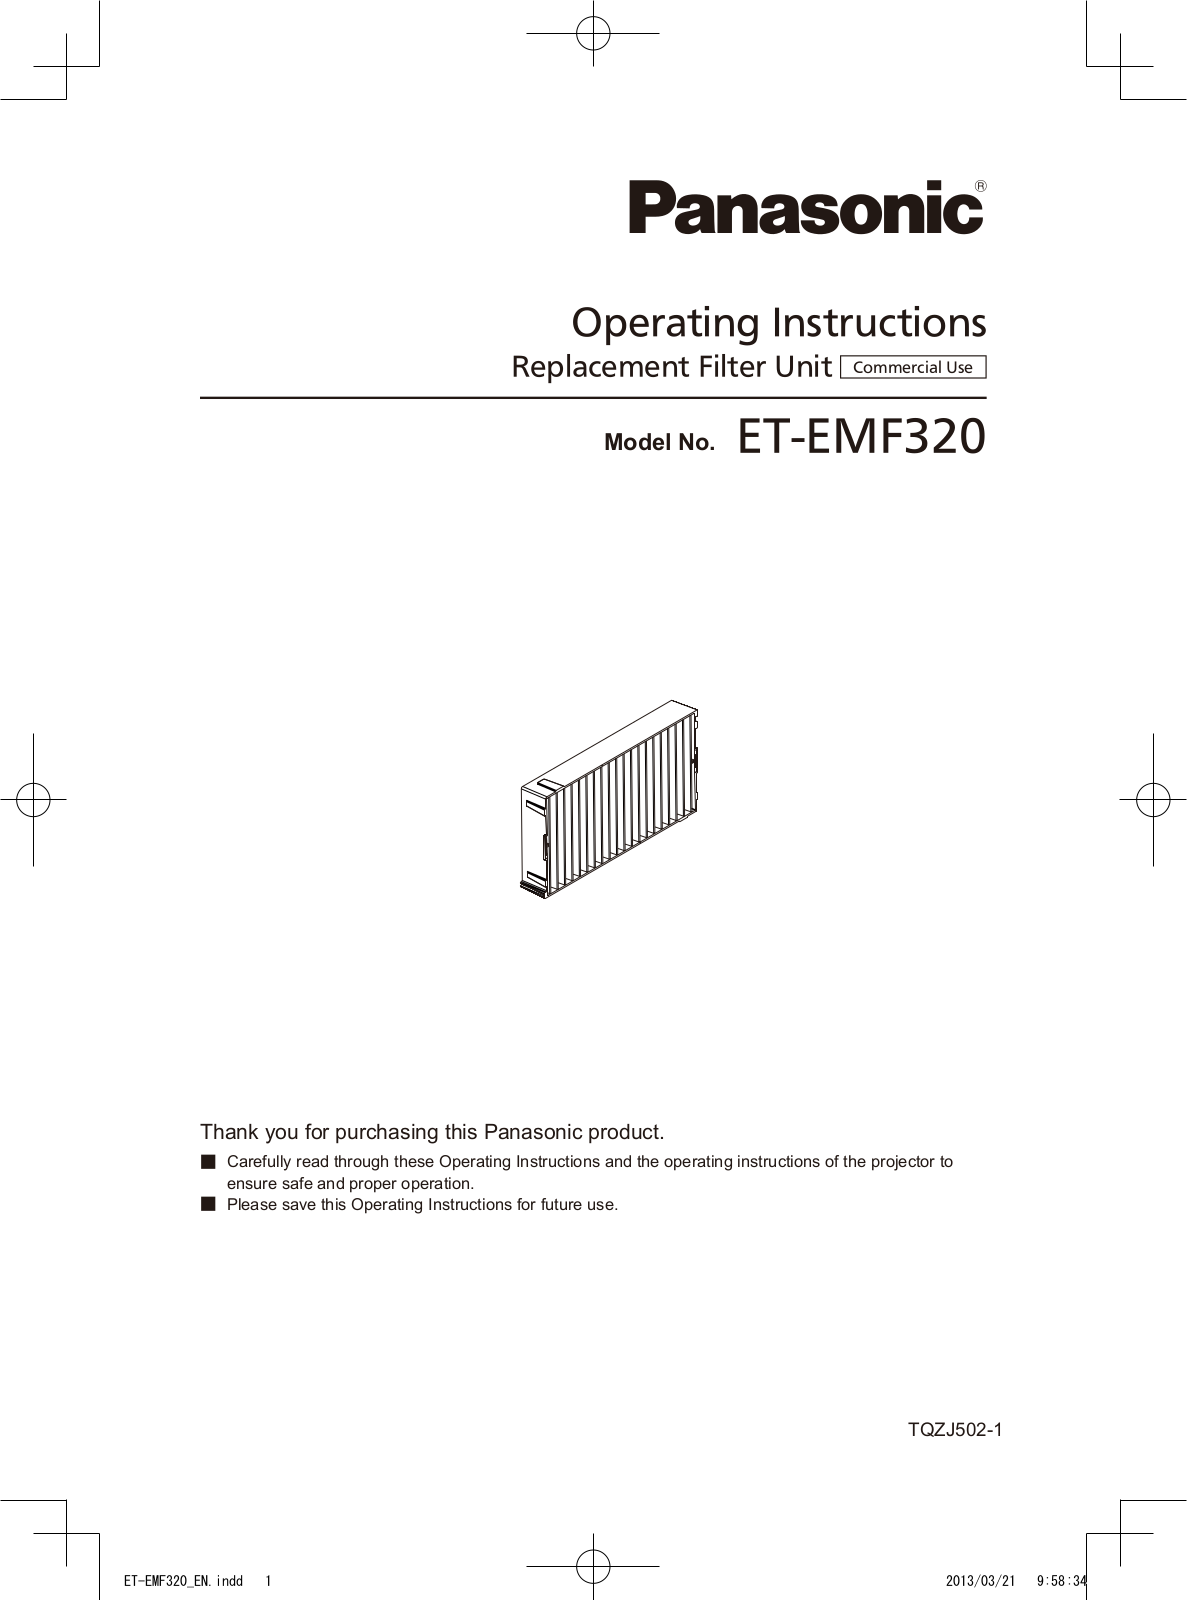 Panasonic ETEMF320 Instructions